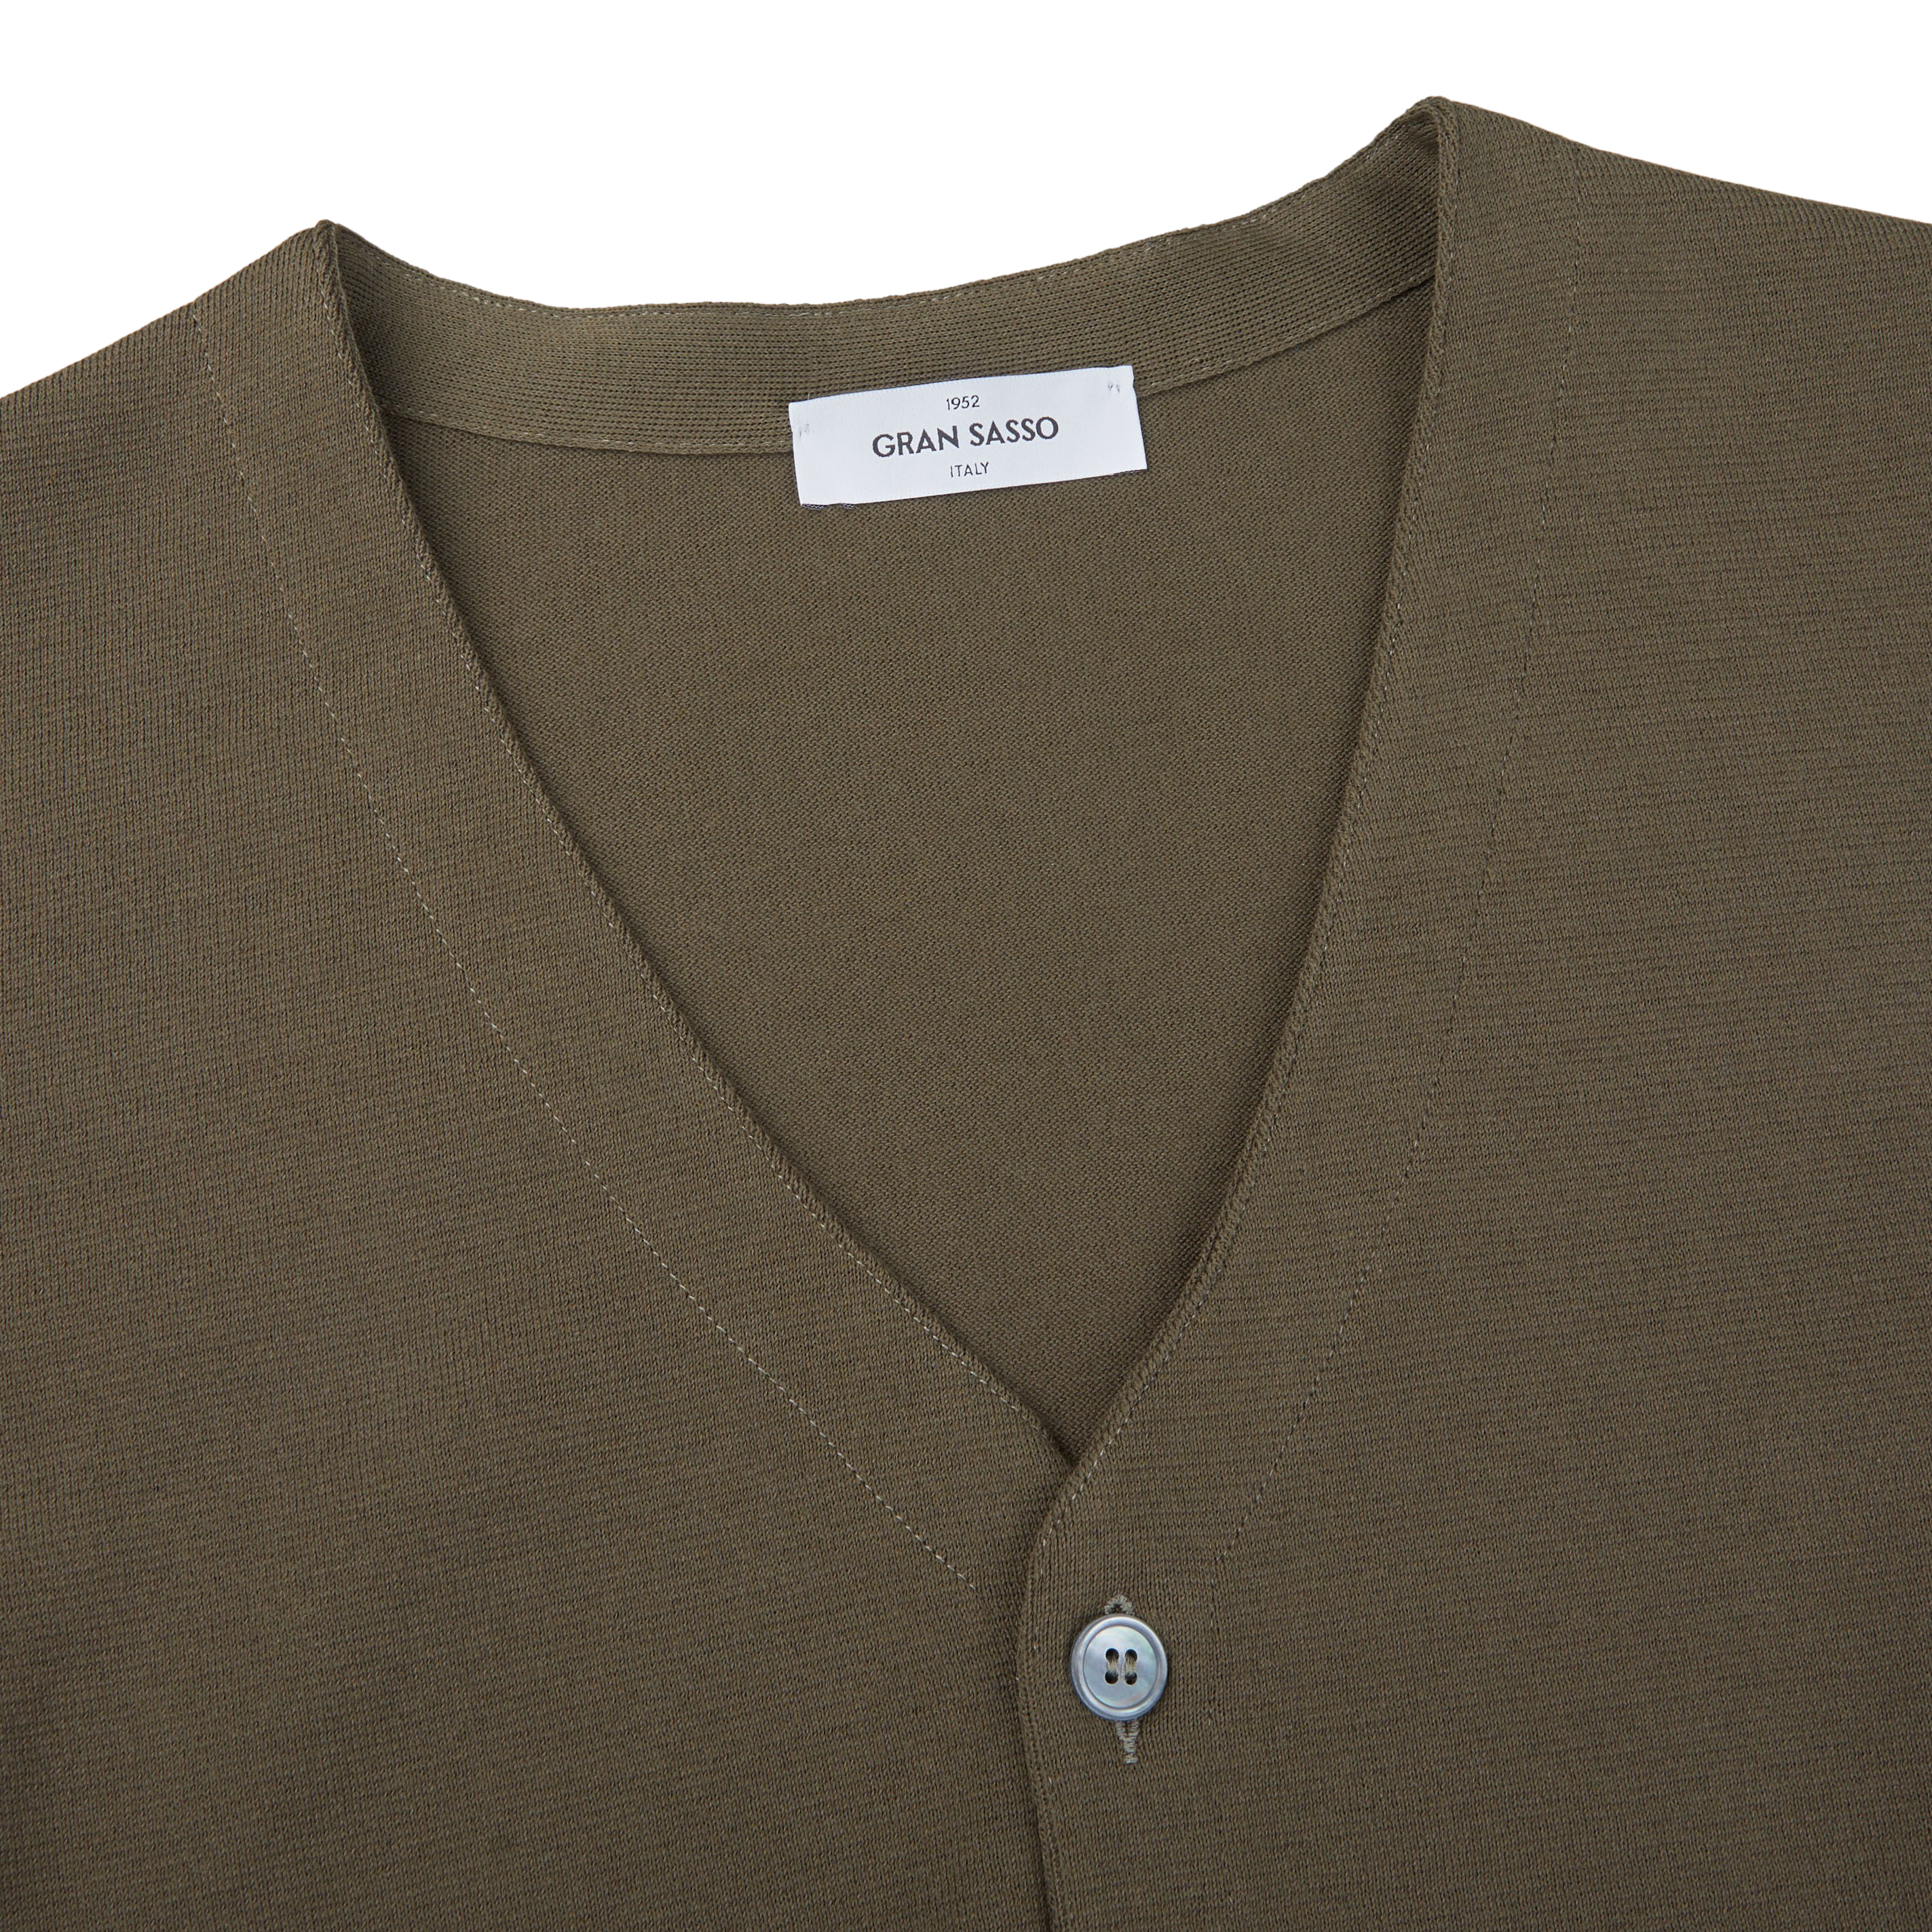 Gran Sasso Olive Green Fresh Cotton Knitted Waistcoat Collar